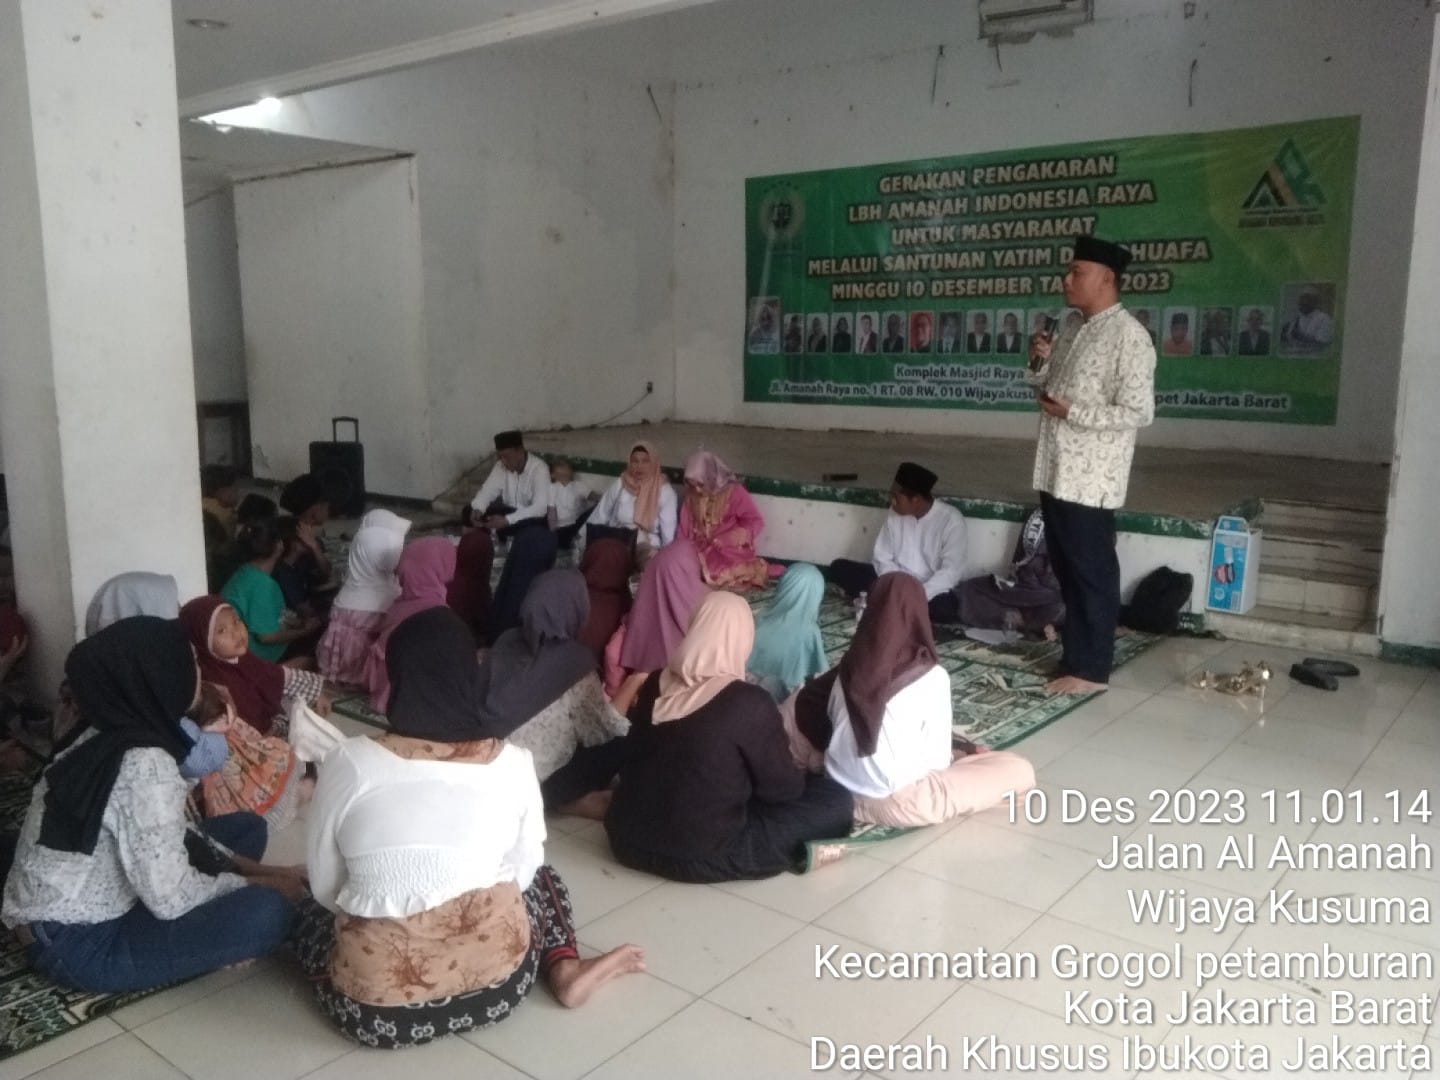 Gerakan Pengakaran Lbh Amanah Indonesia Raya Melalui Santunan Yatim Dan Dhuafa 2023